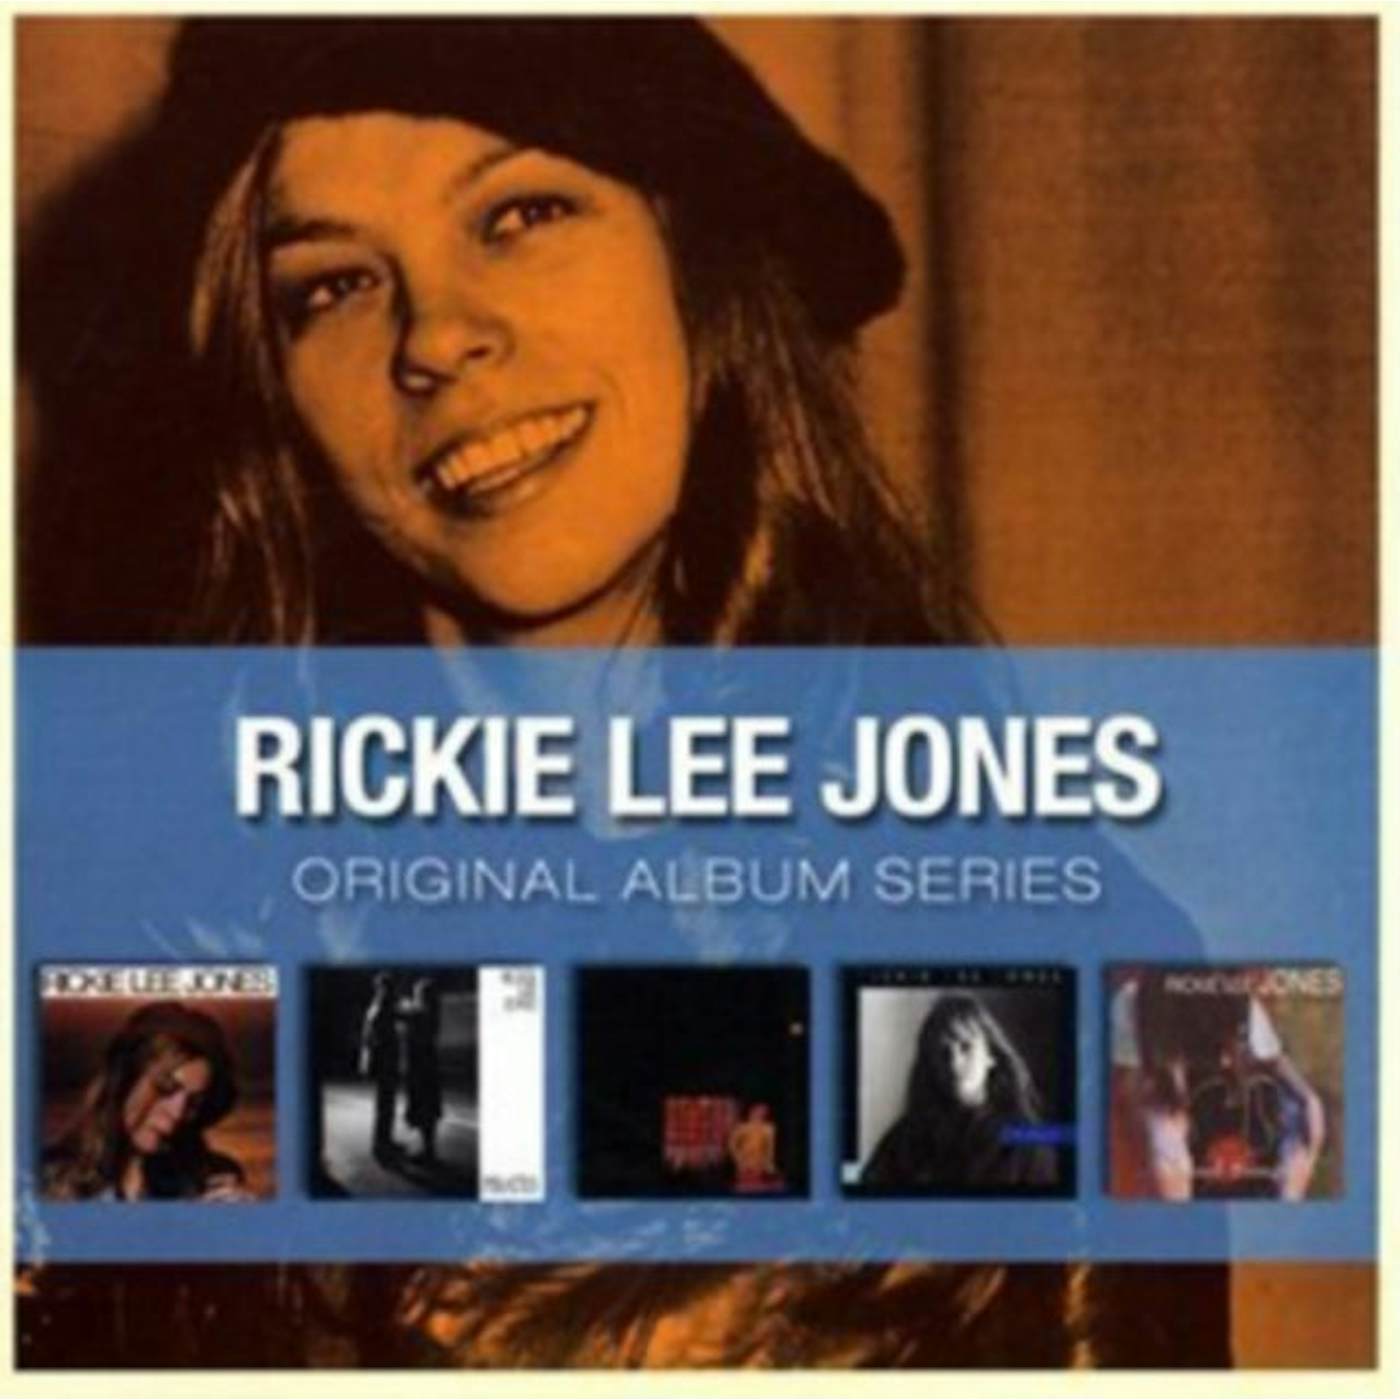 Rickie Lee Jones CD - Original Album Series